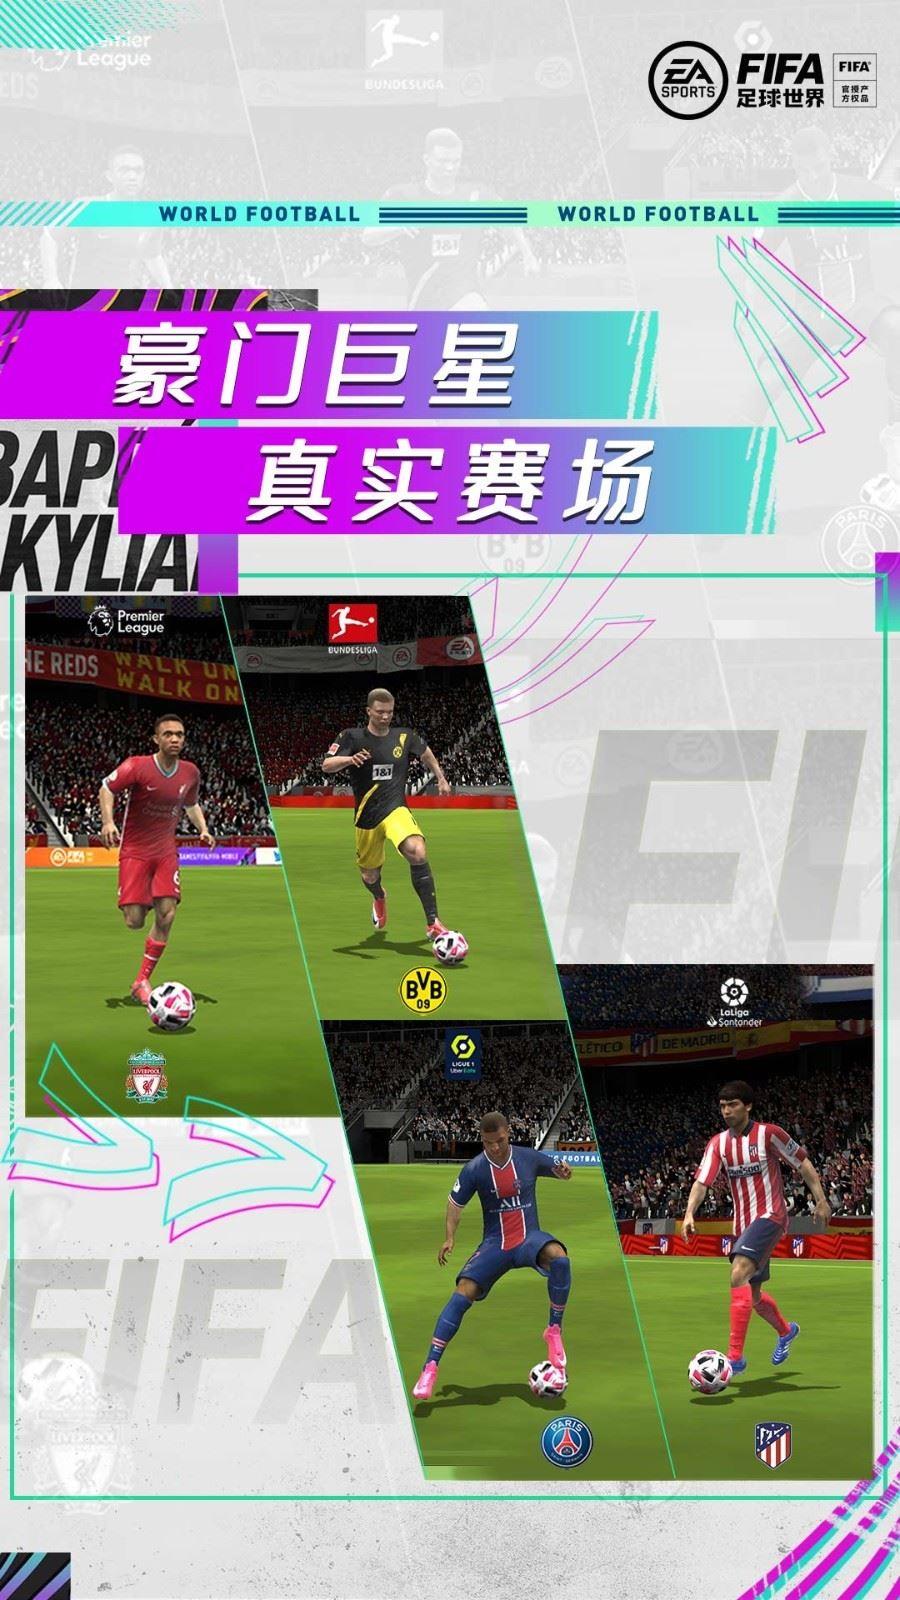 fifa online4手机版-fifa足球世界下载官方正版手游免费下载安装